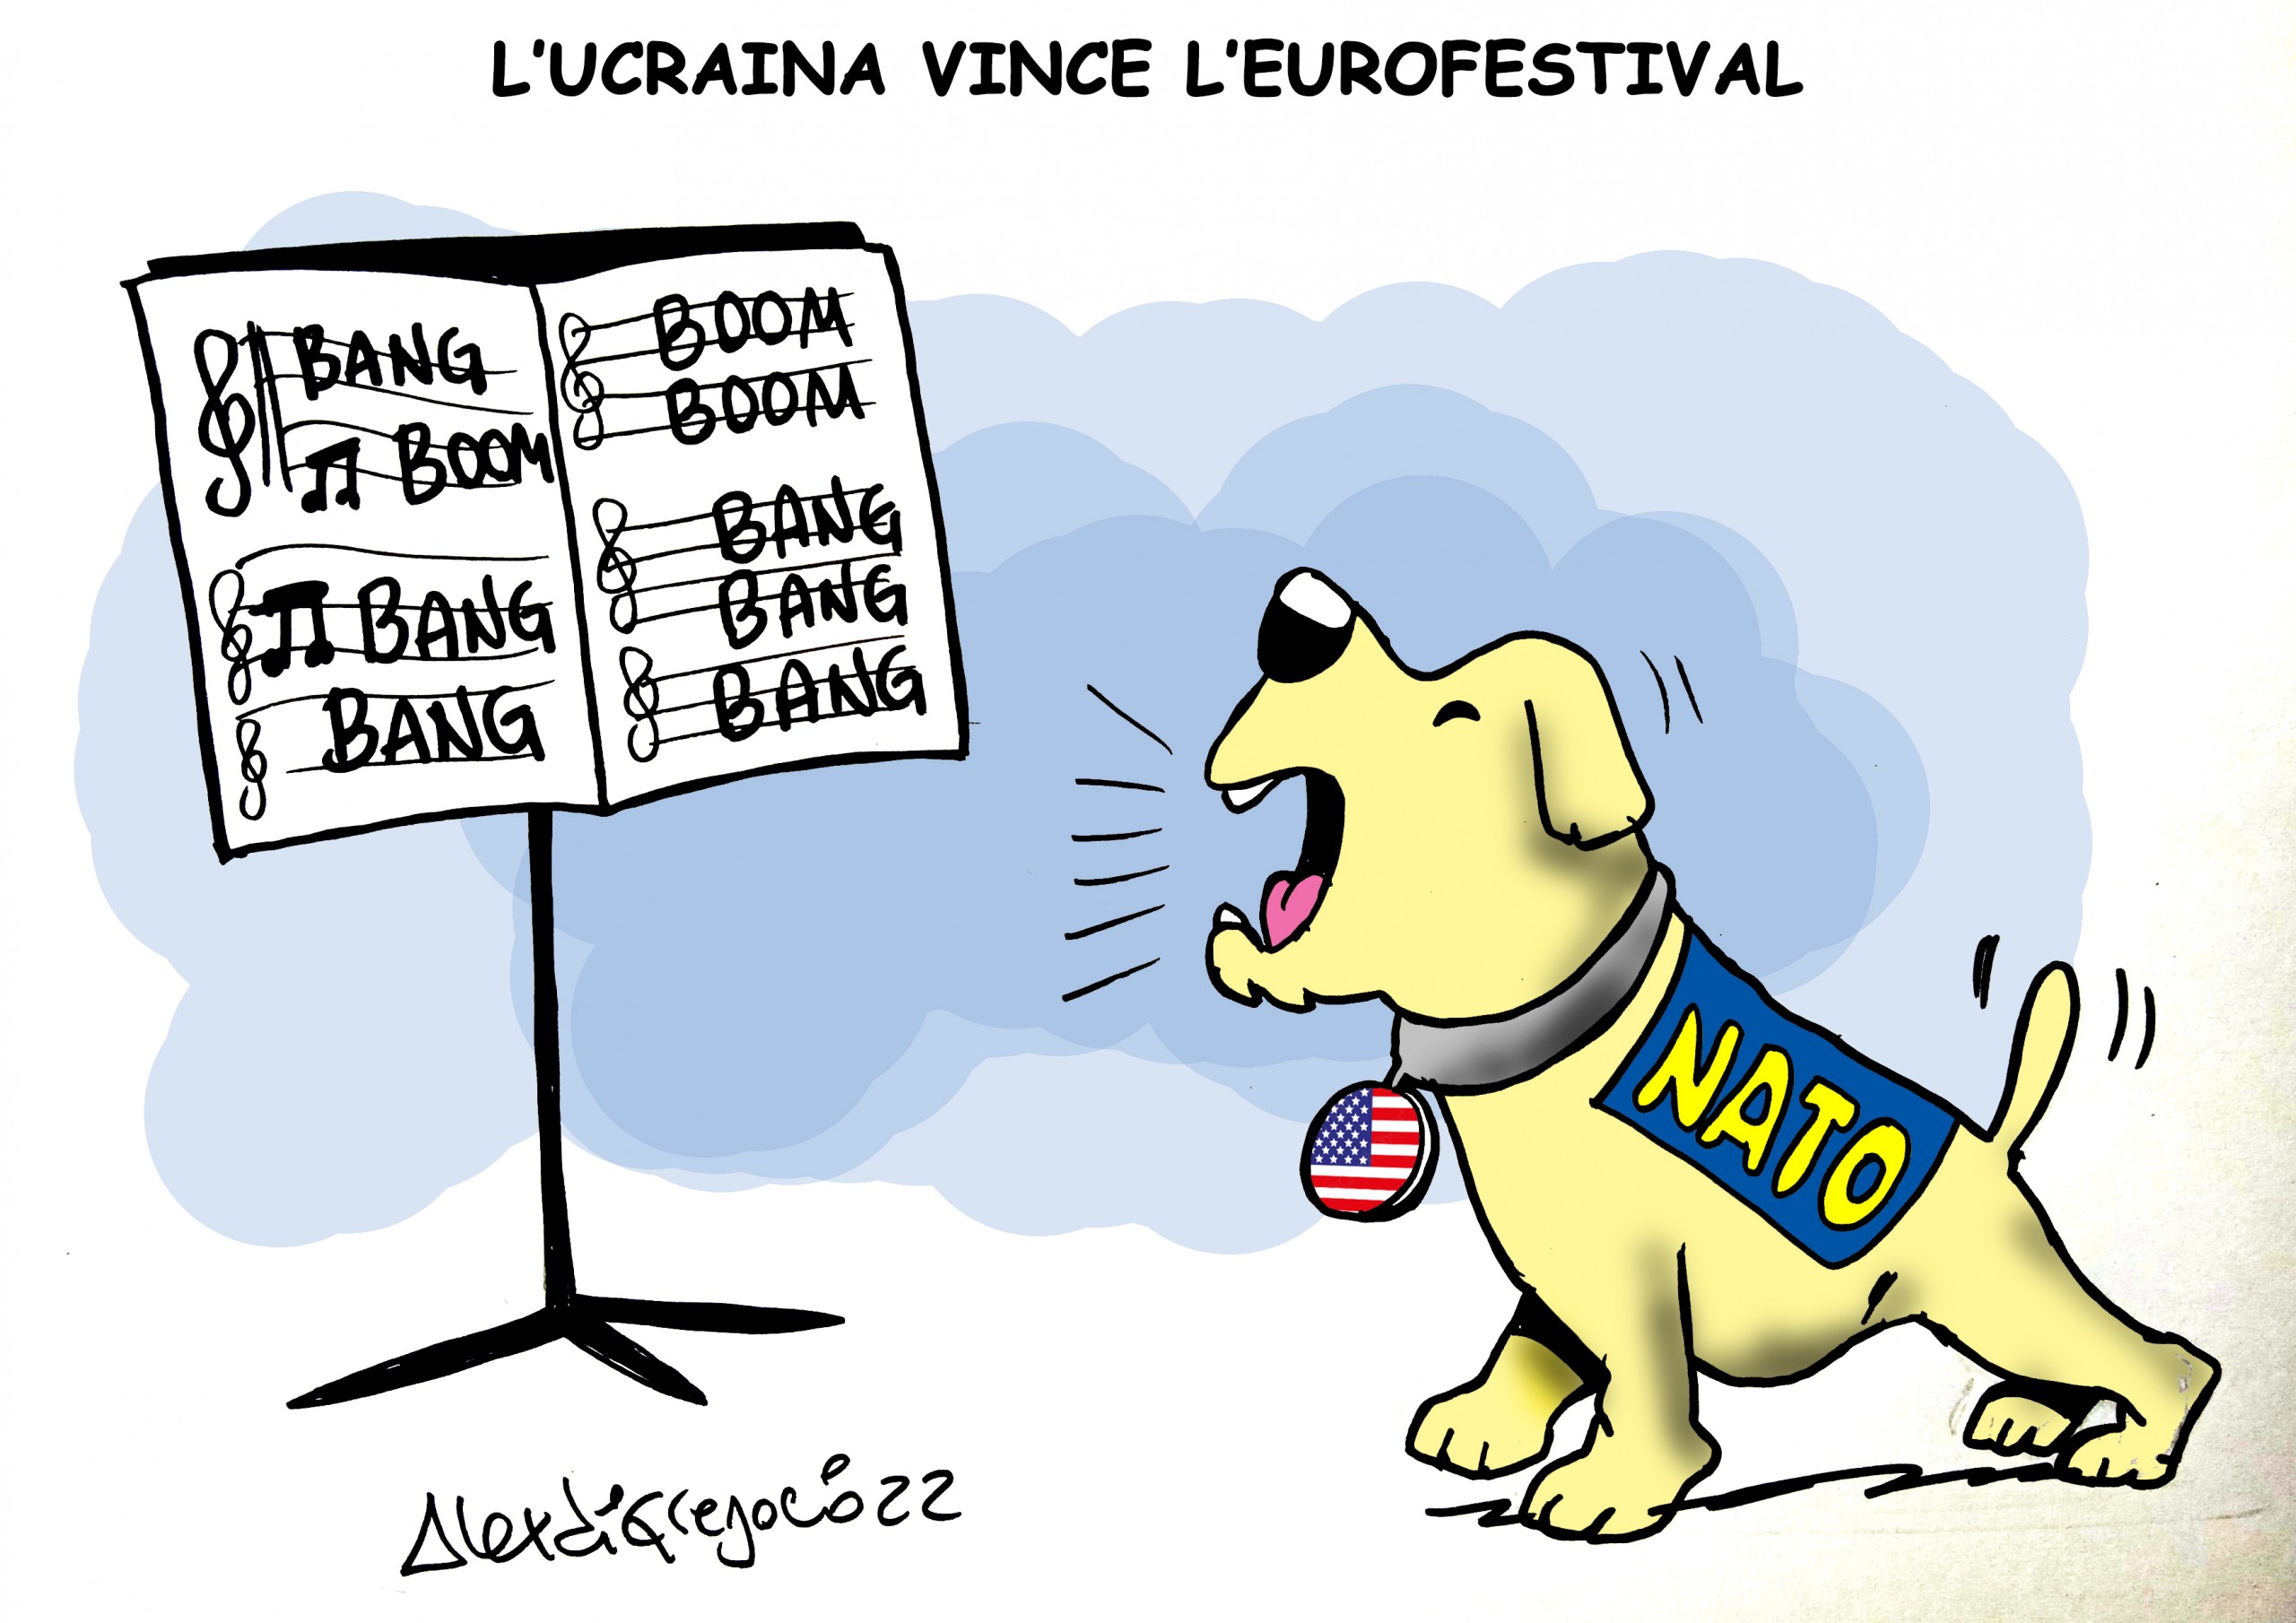 L’Ucraina vince l’Eurofestival